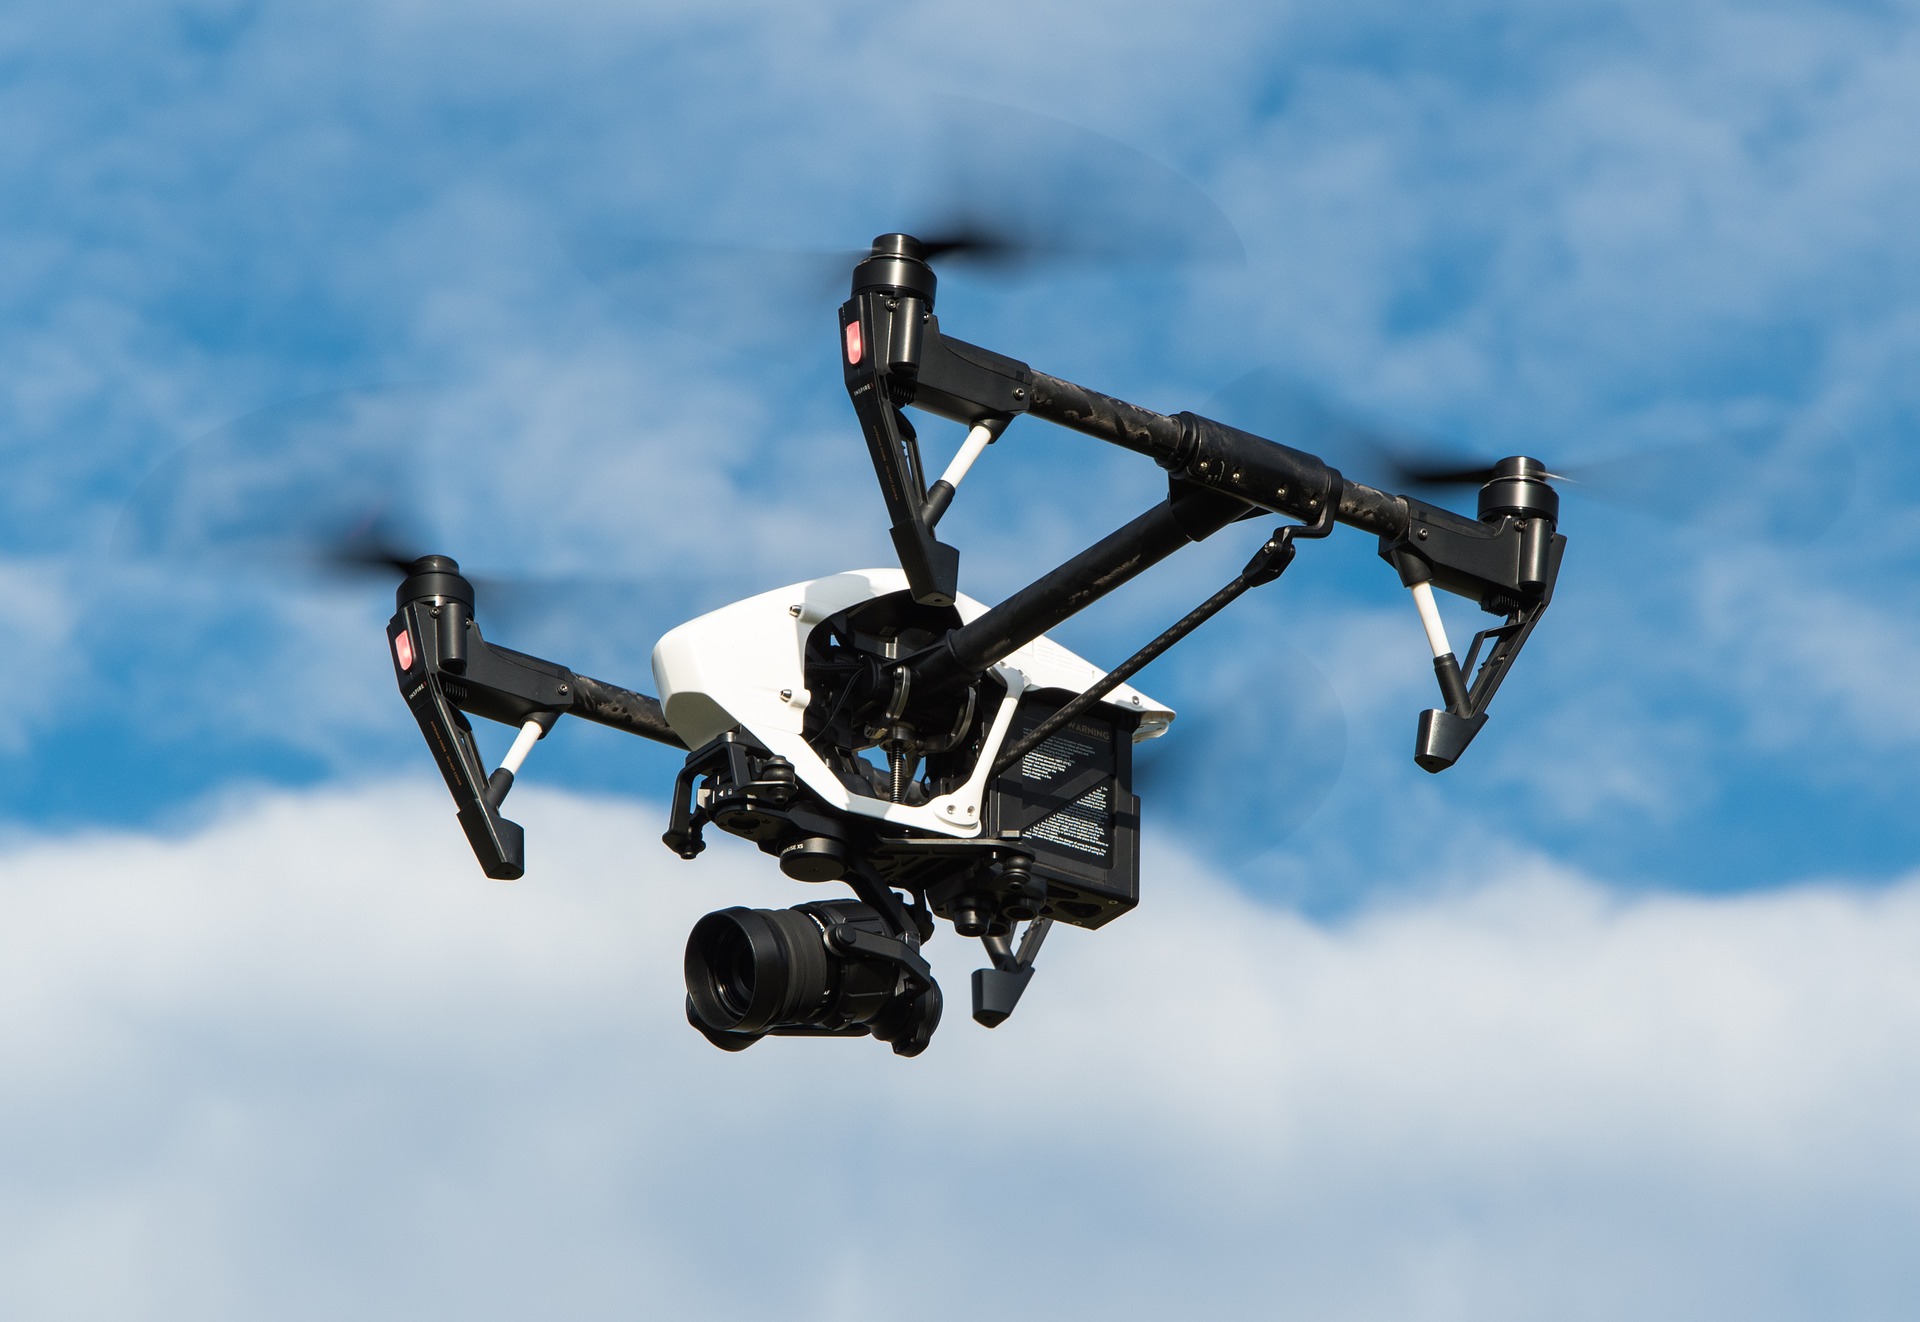 A drone airborne